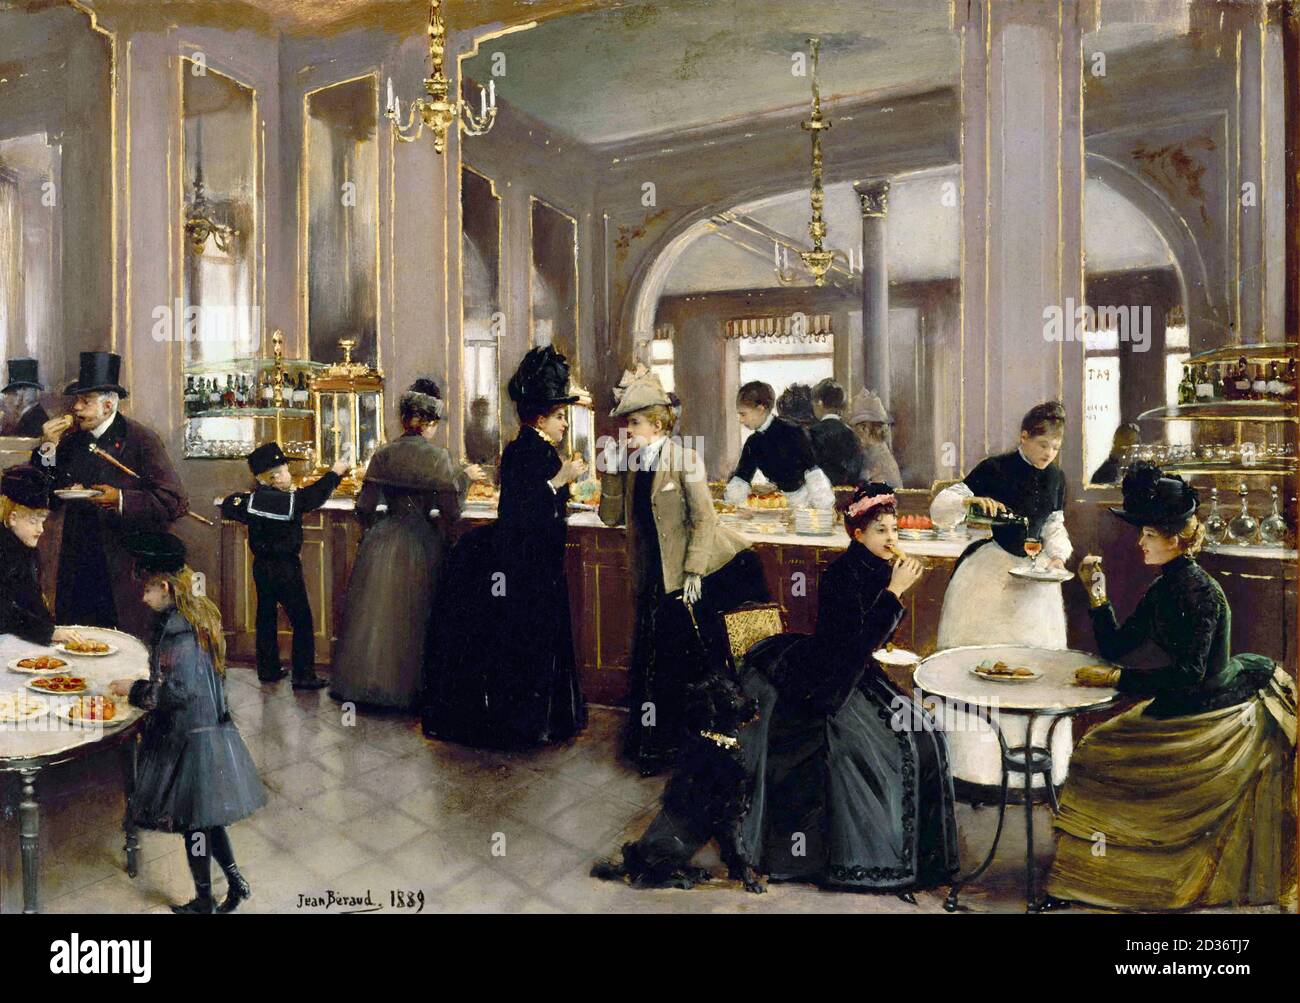 Jean Béraud. Gemälde mit dem Titel 'La Pâtisserie Gloppe', Öl auf Leinwand, c. 1889 von Jean Beraud (1849-1935). Pariser Café-Interieur, 19. Jahrhundert. Stockfoto